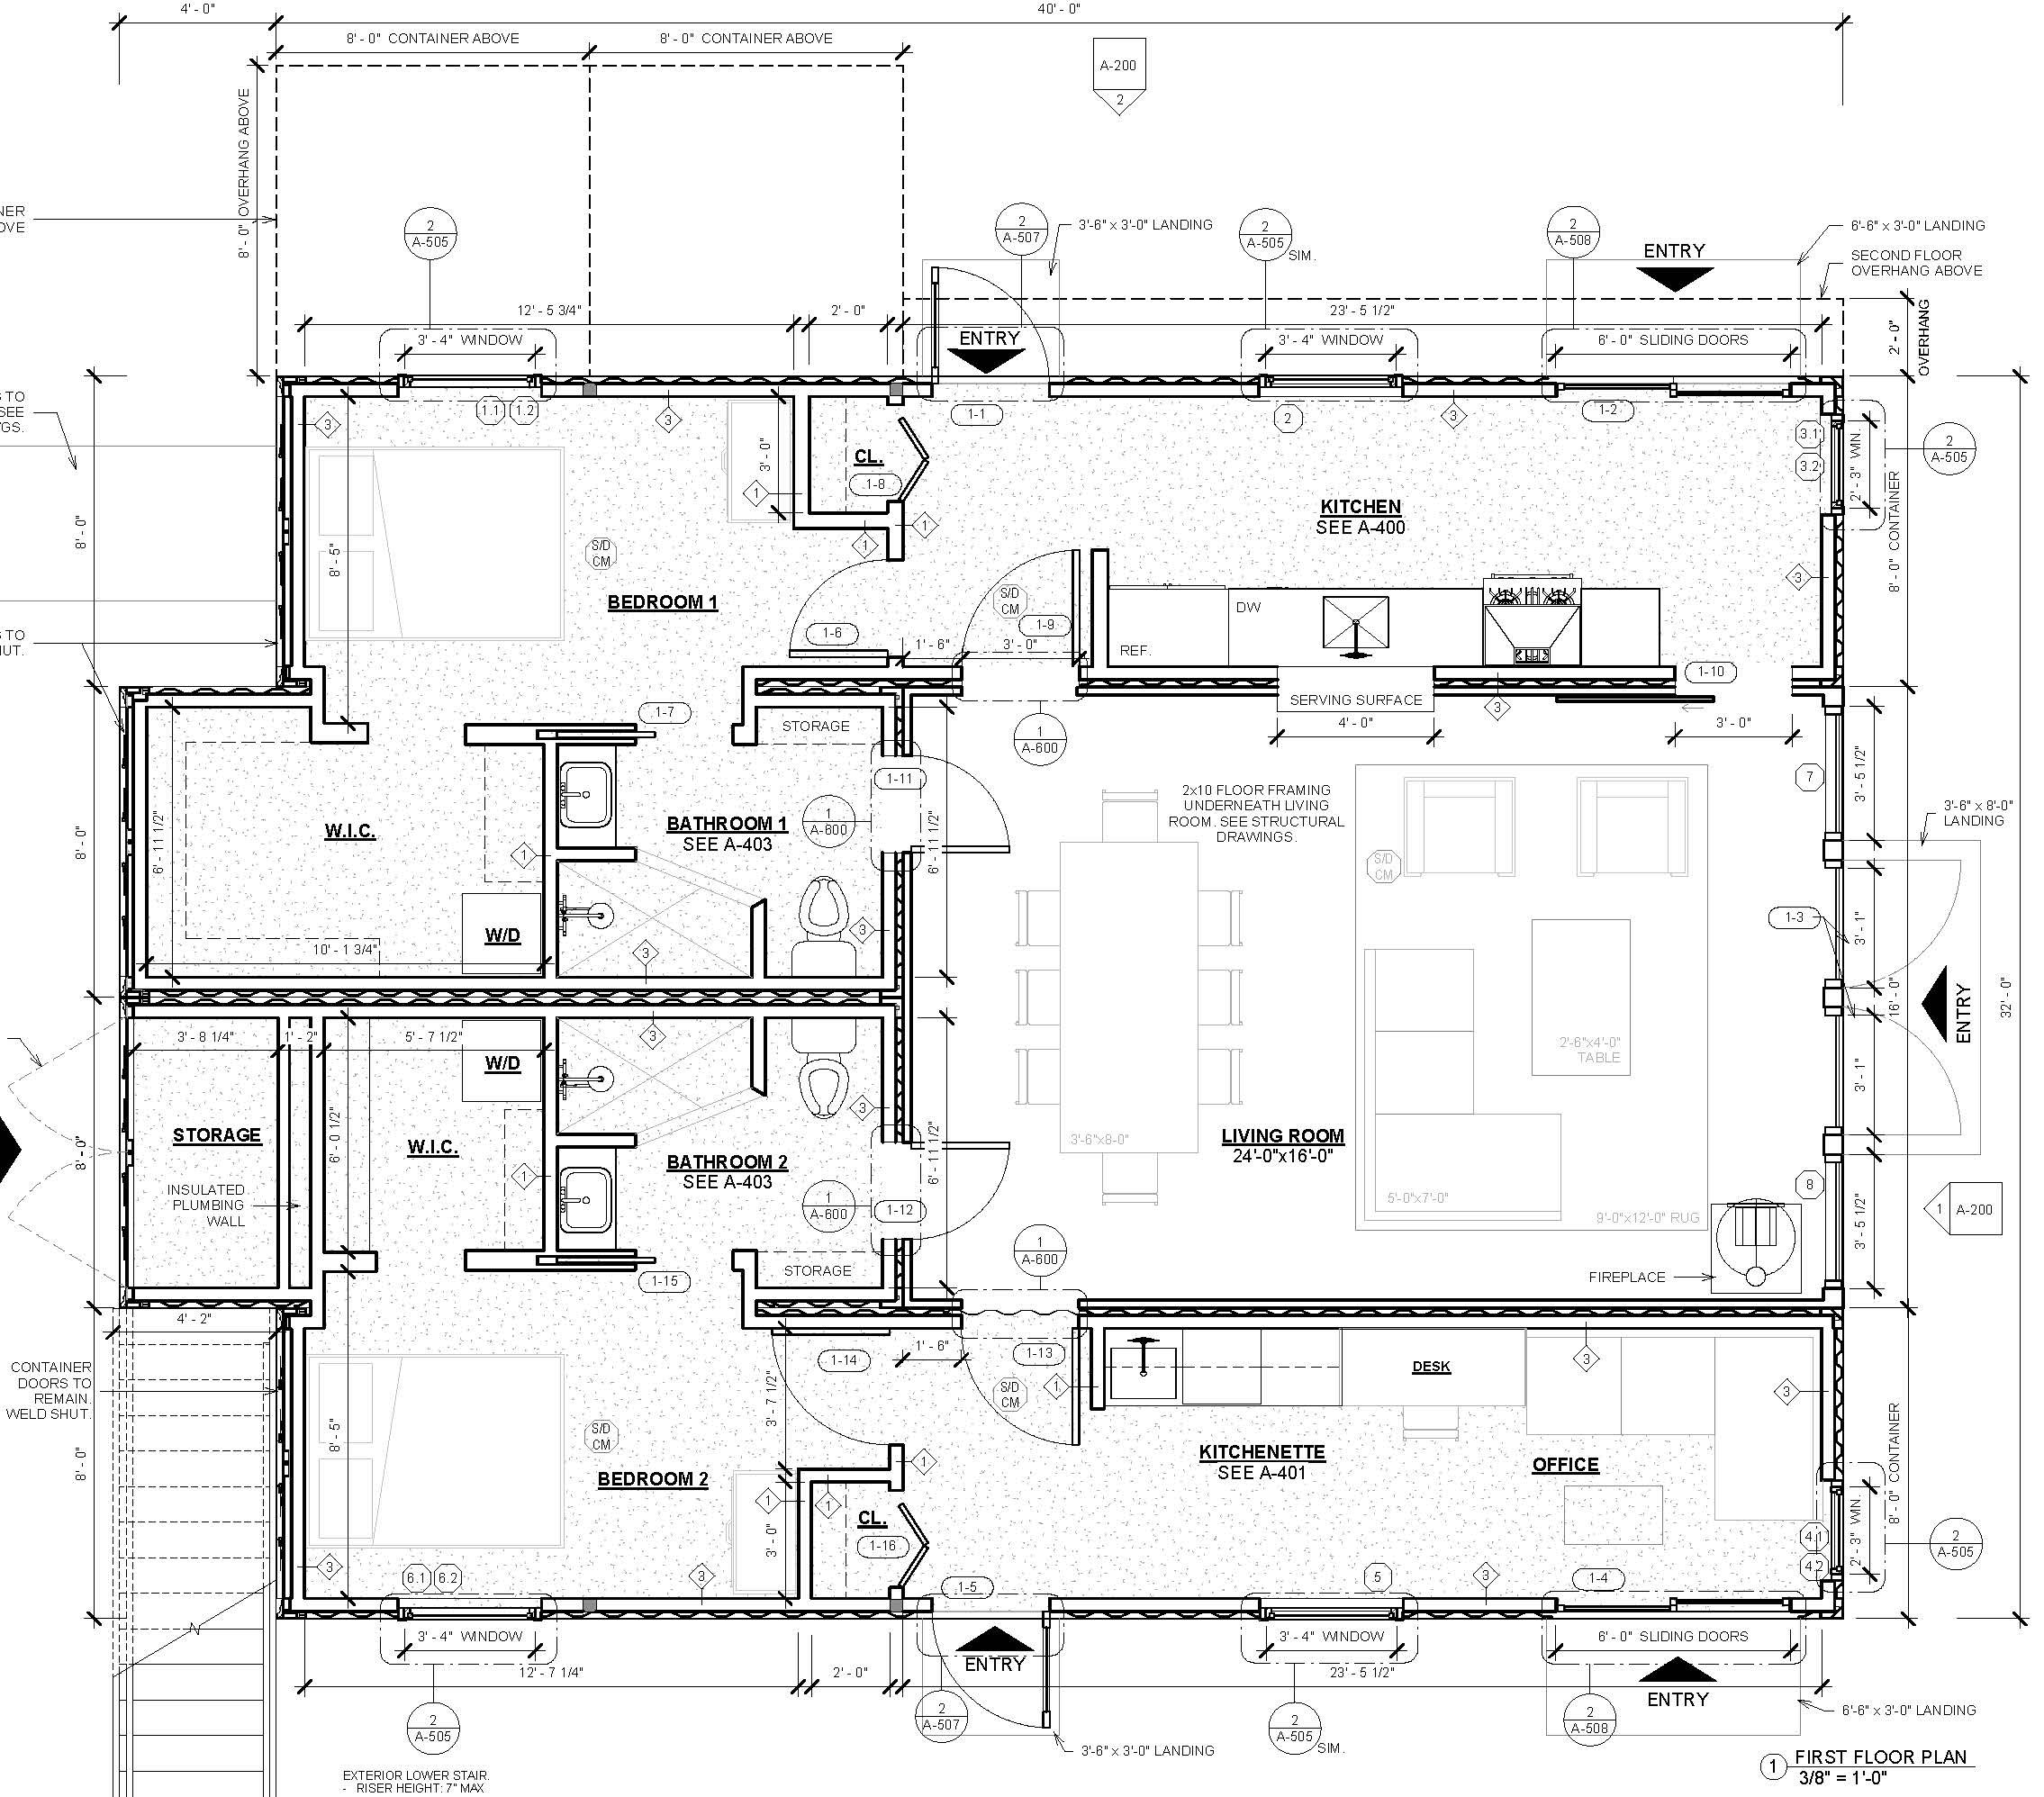 hudson first floor plan.jpg